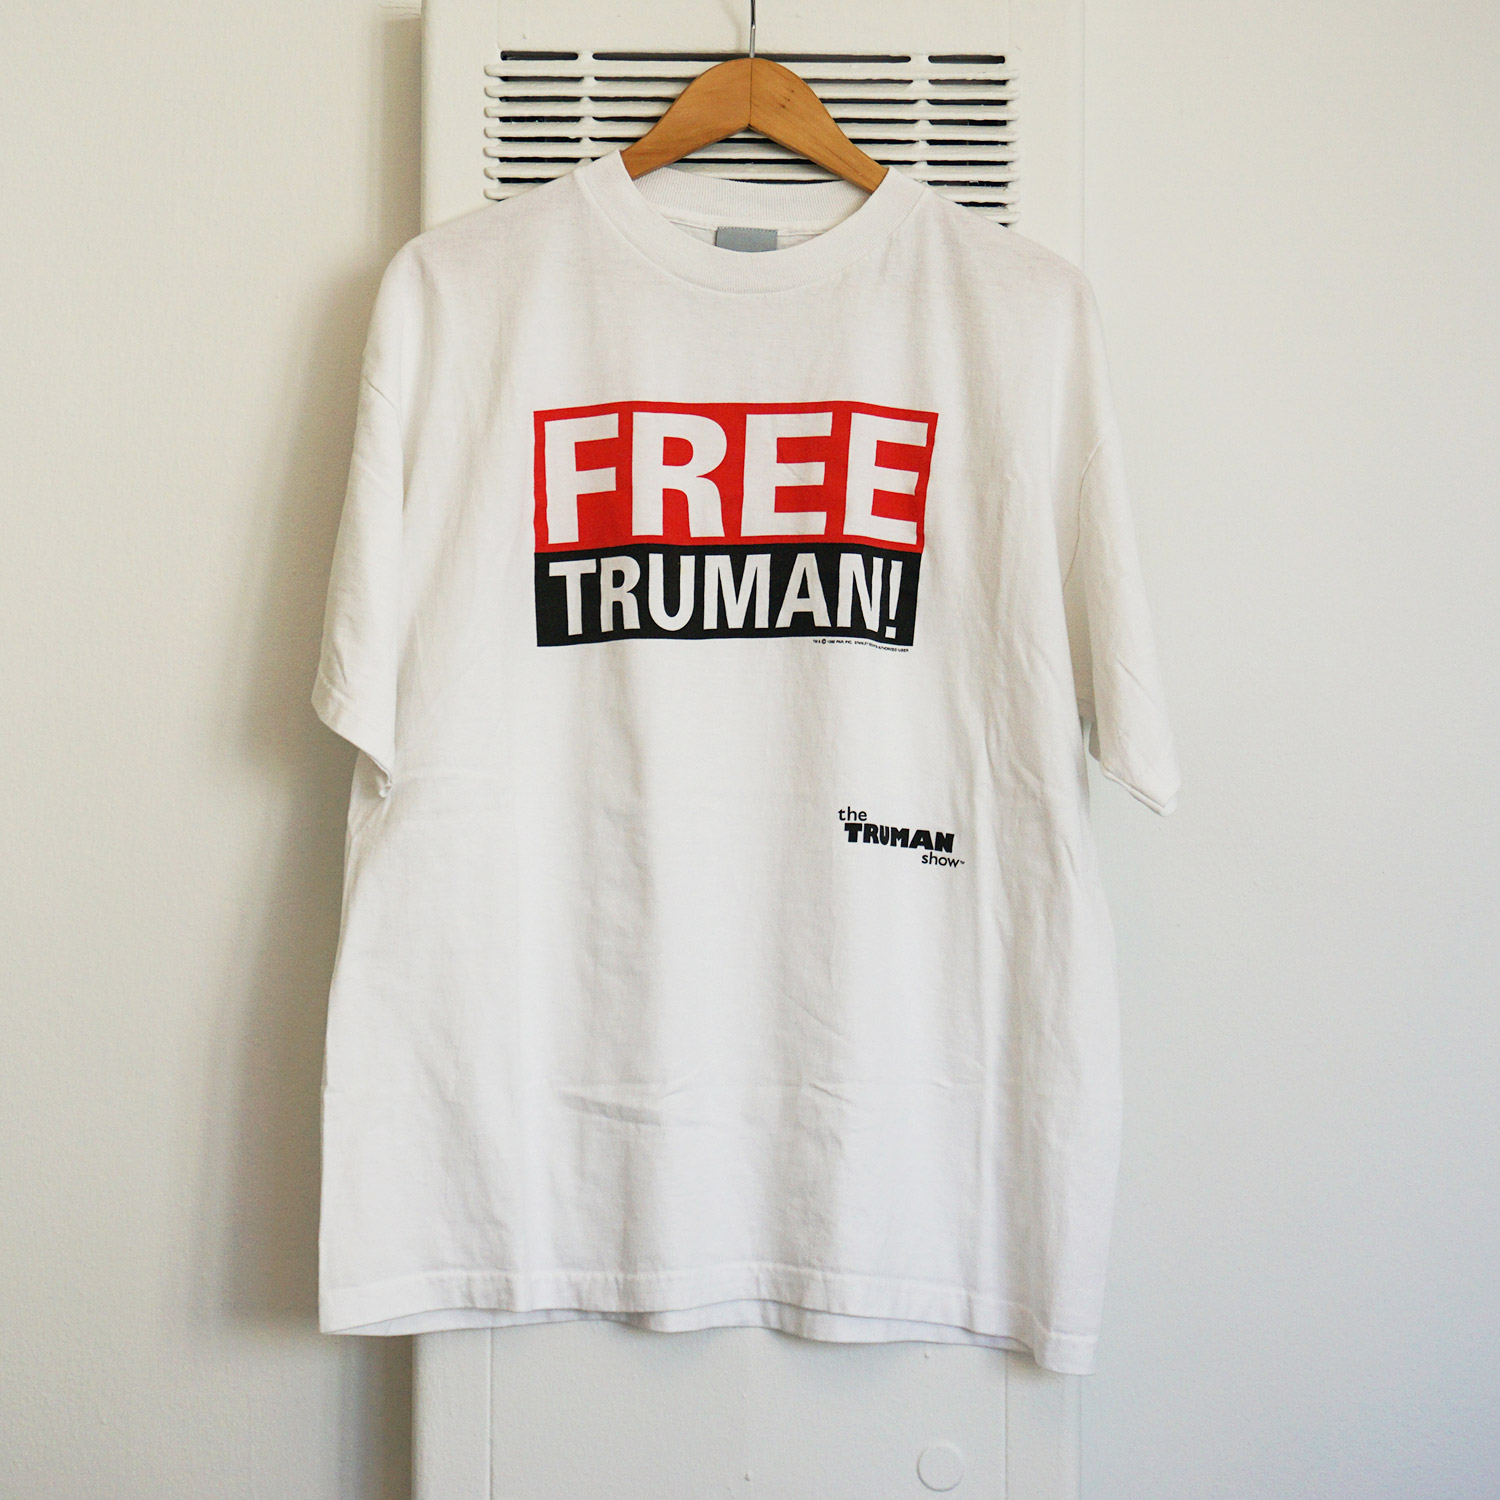 The Truman Show T-shirt